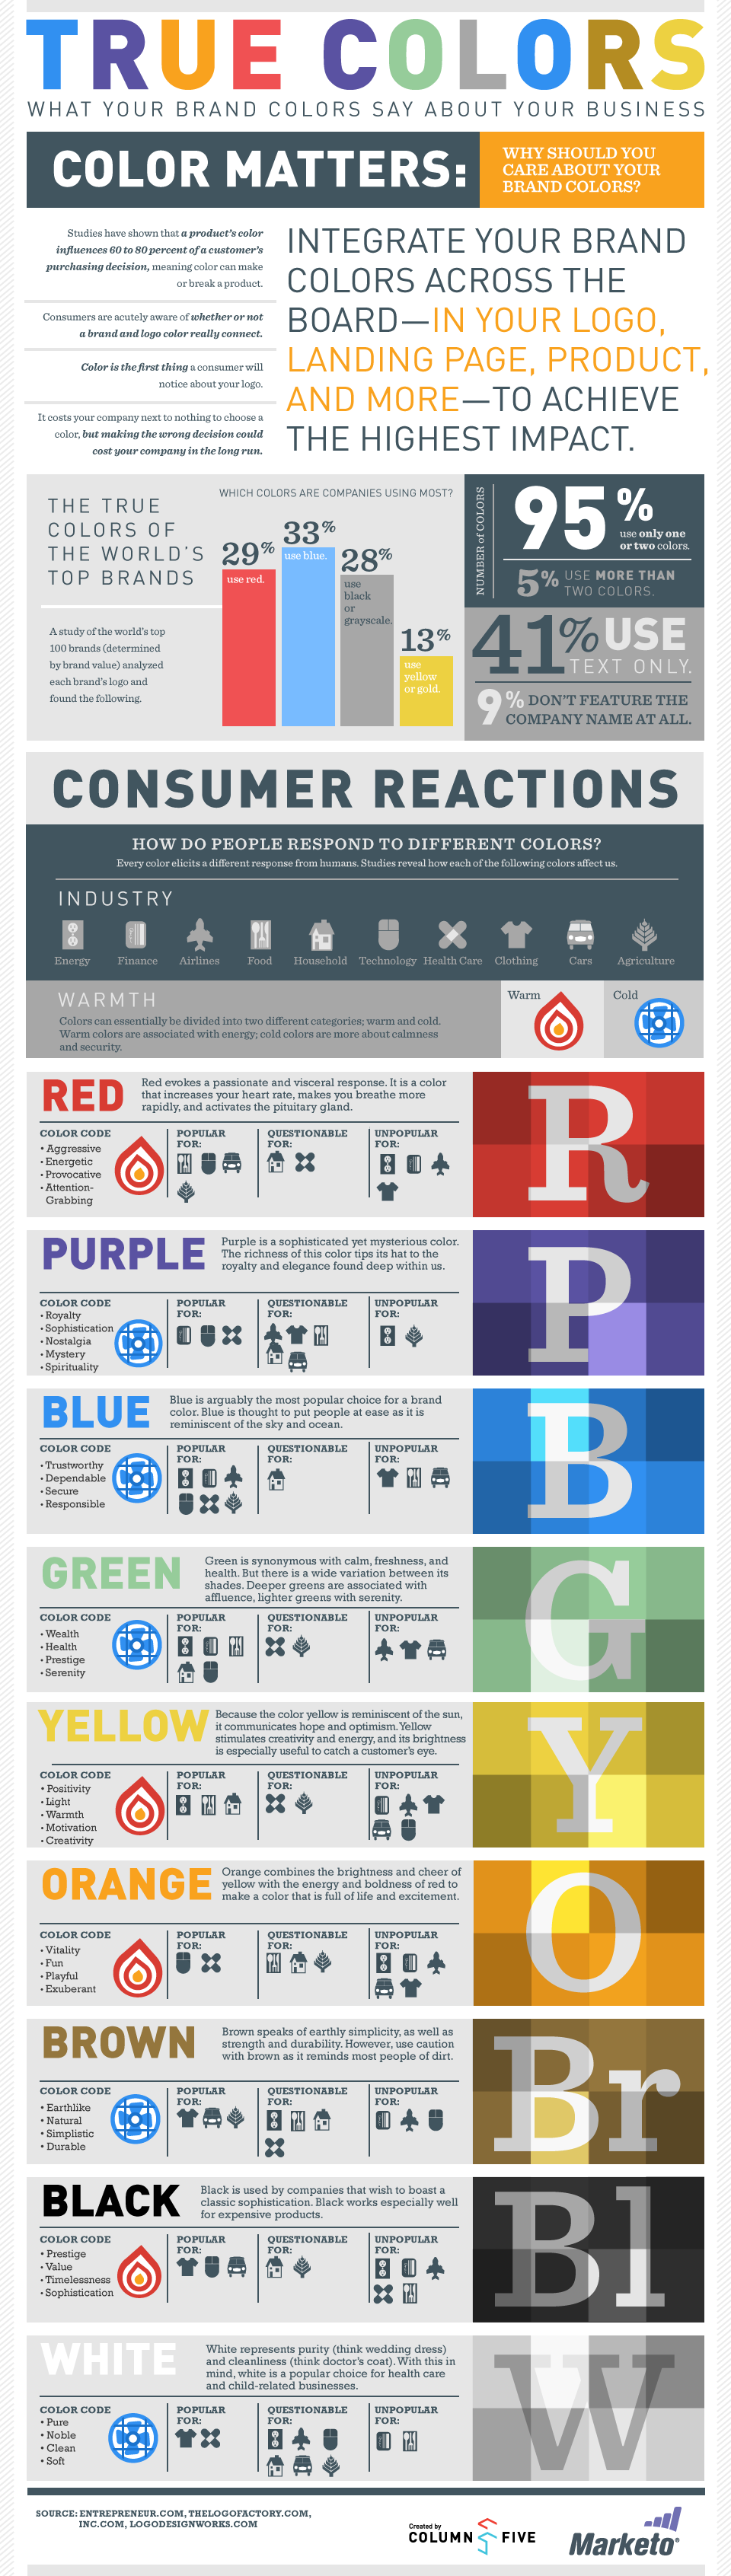 True Colors infographic